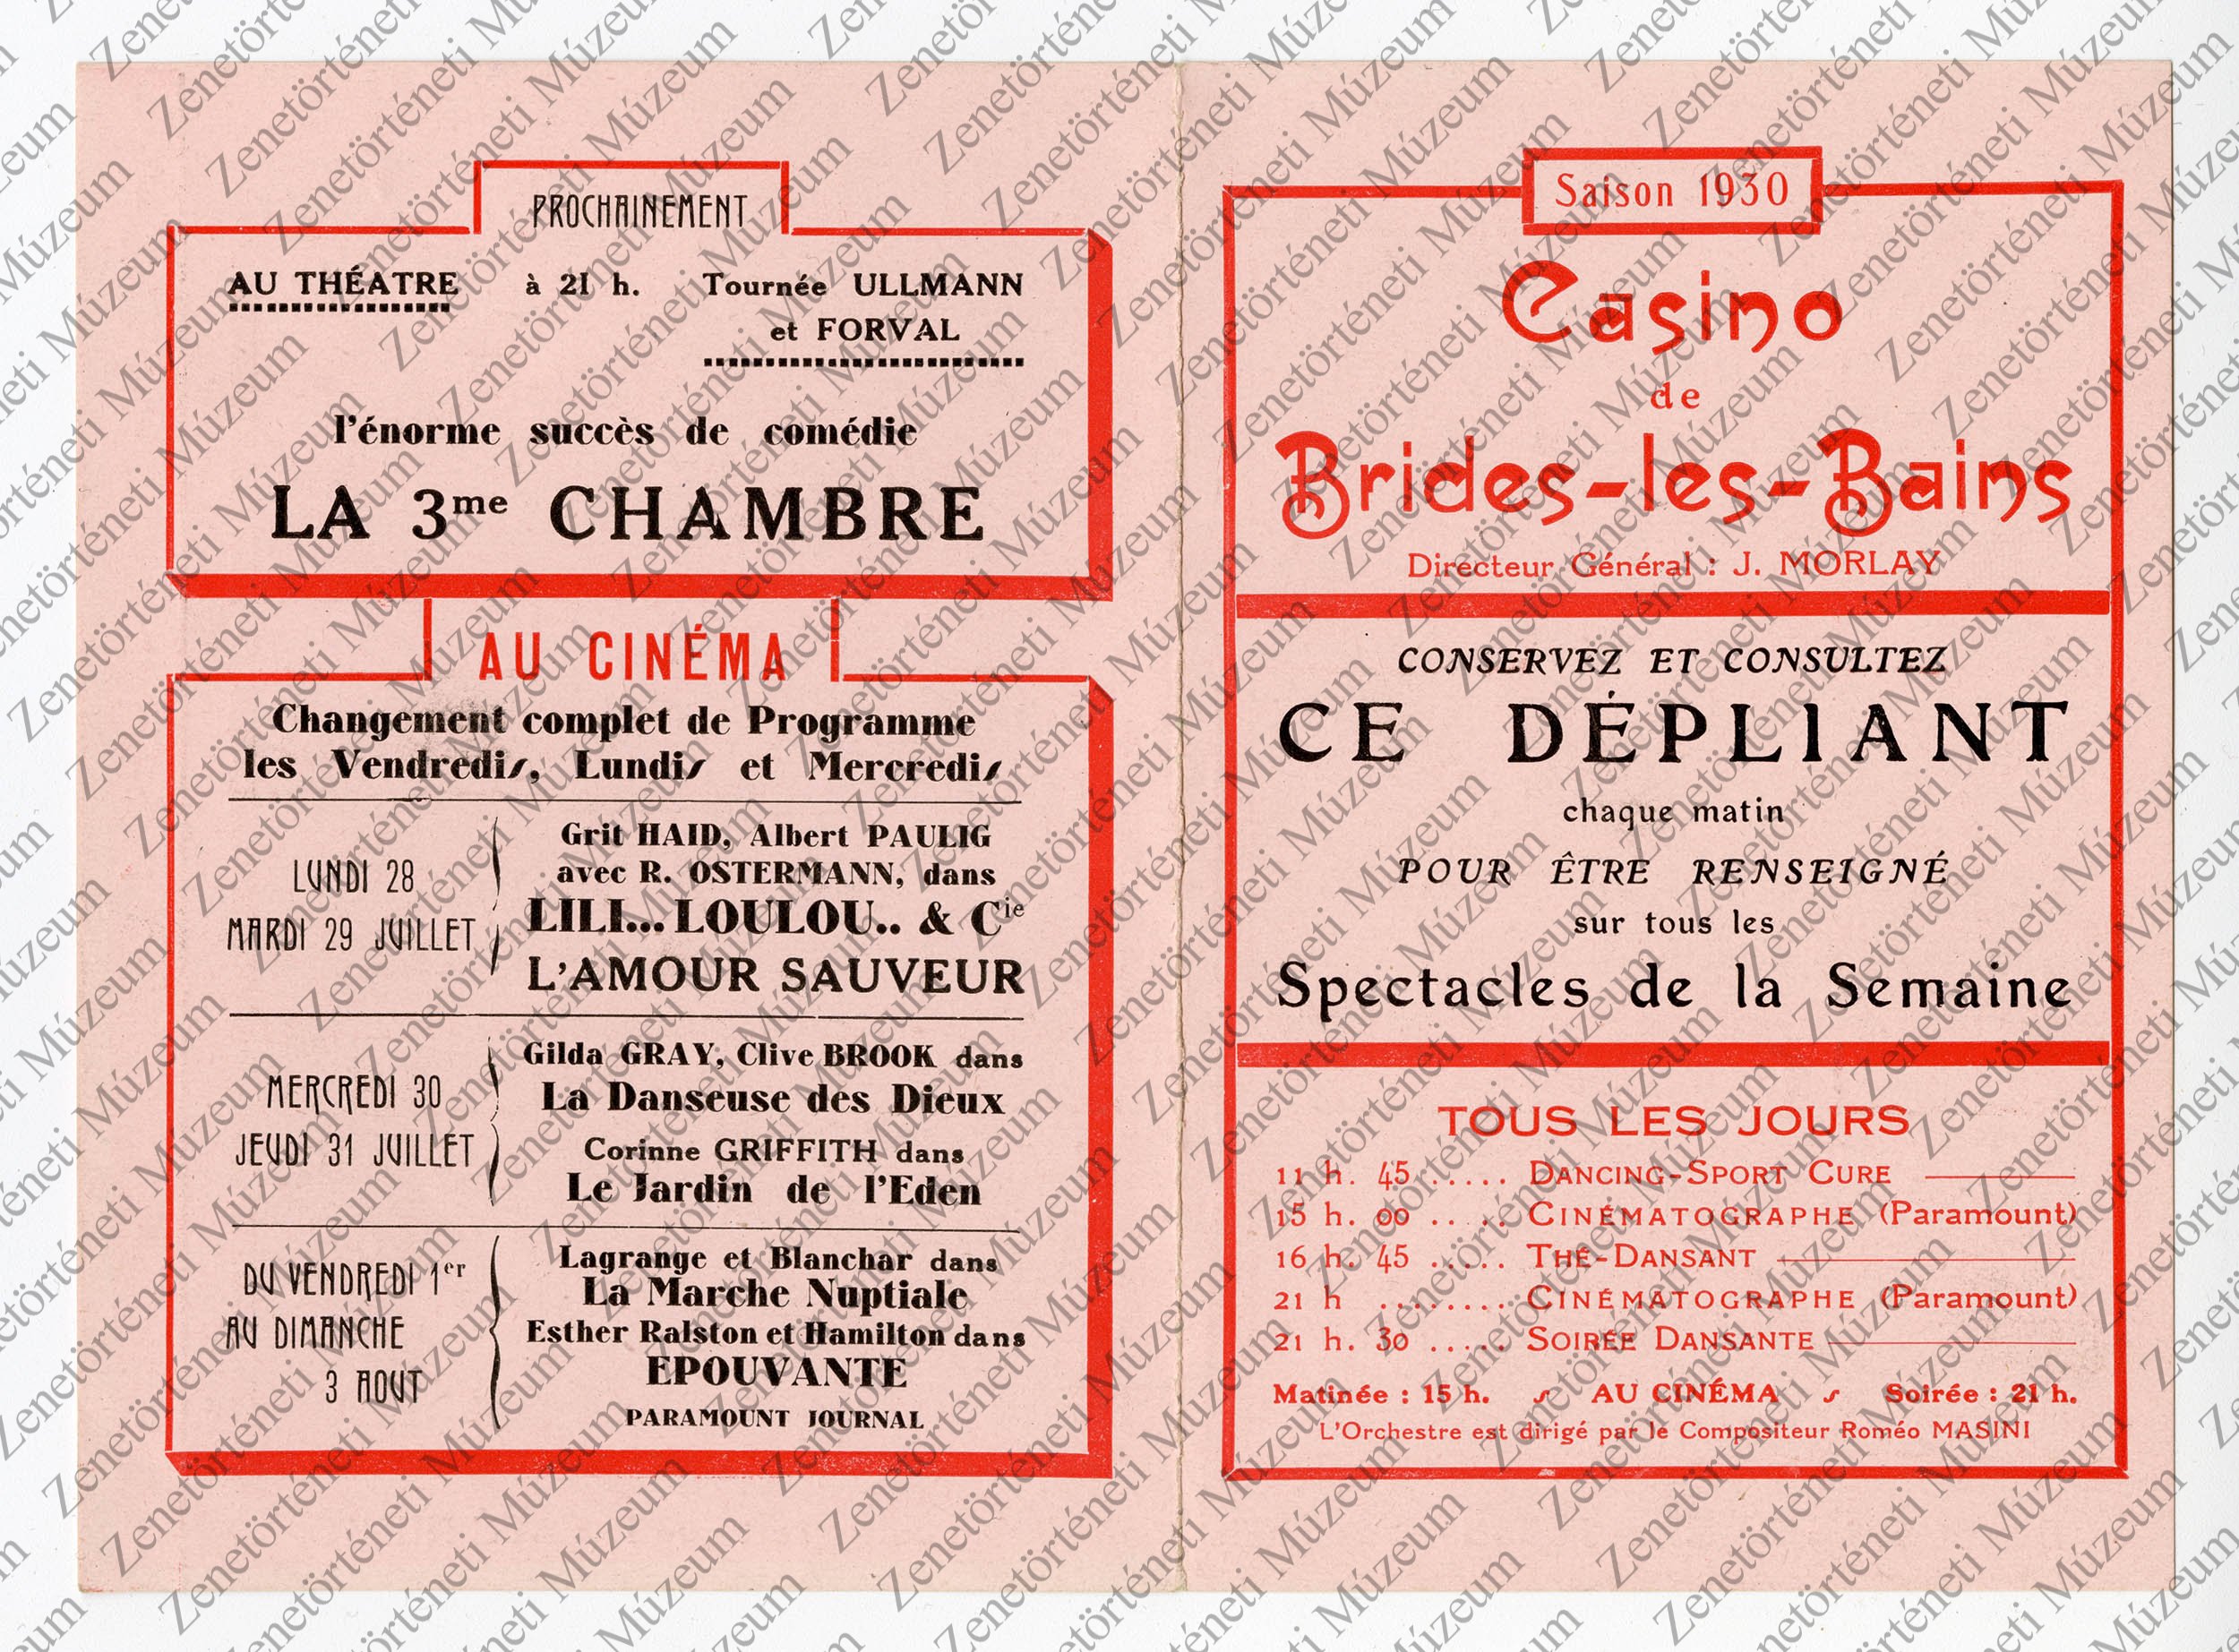 A Casino de Brigdes-les-Bain 1930-as műsora (Zenetörténeti Múzeum CC BY-NC-SA)